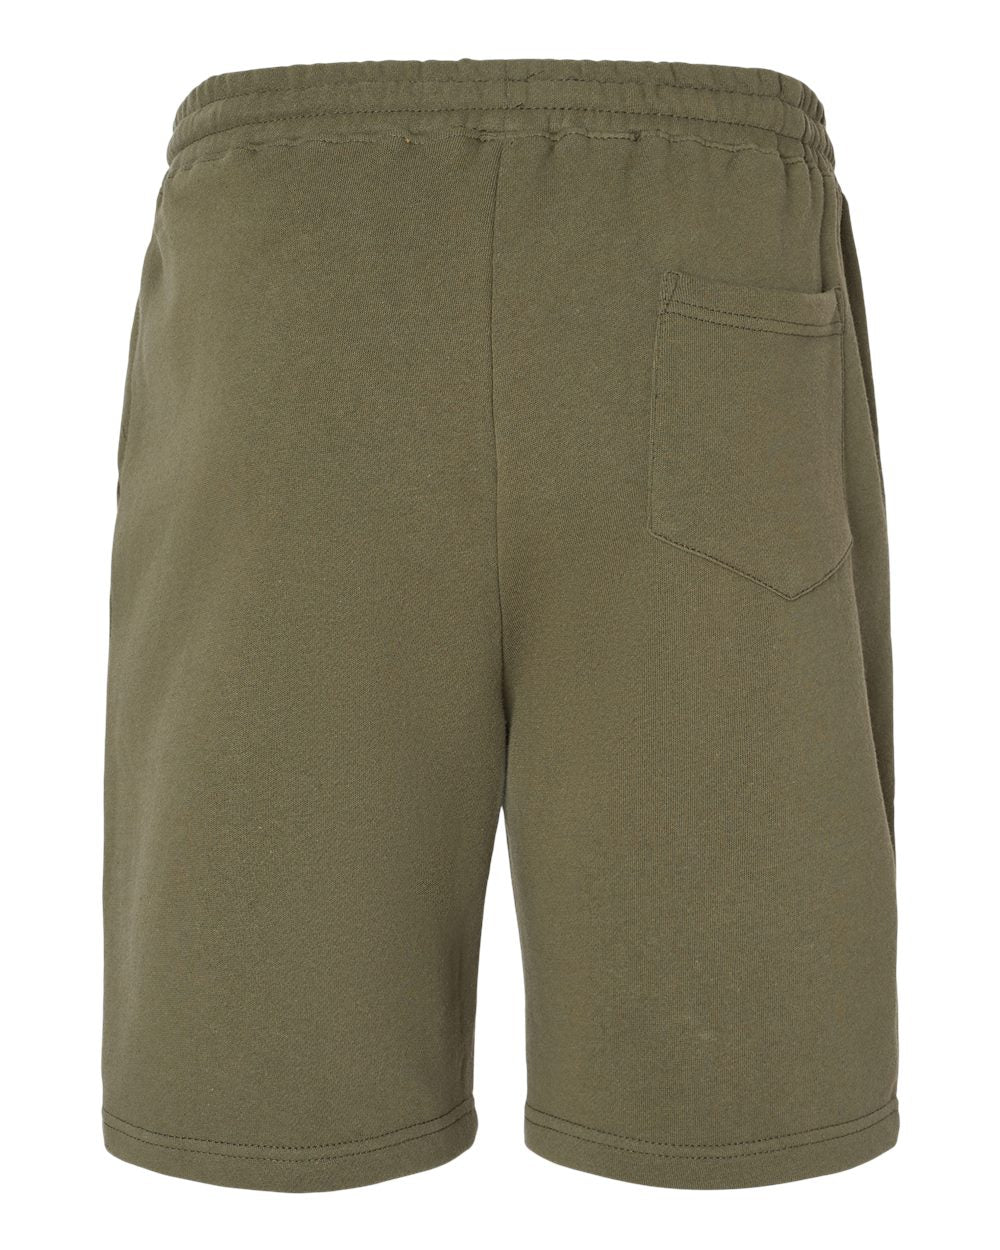 SOULSKY Men's Midweight Fleece Shorts (Army Green)